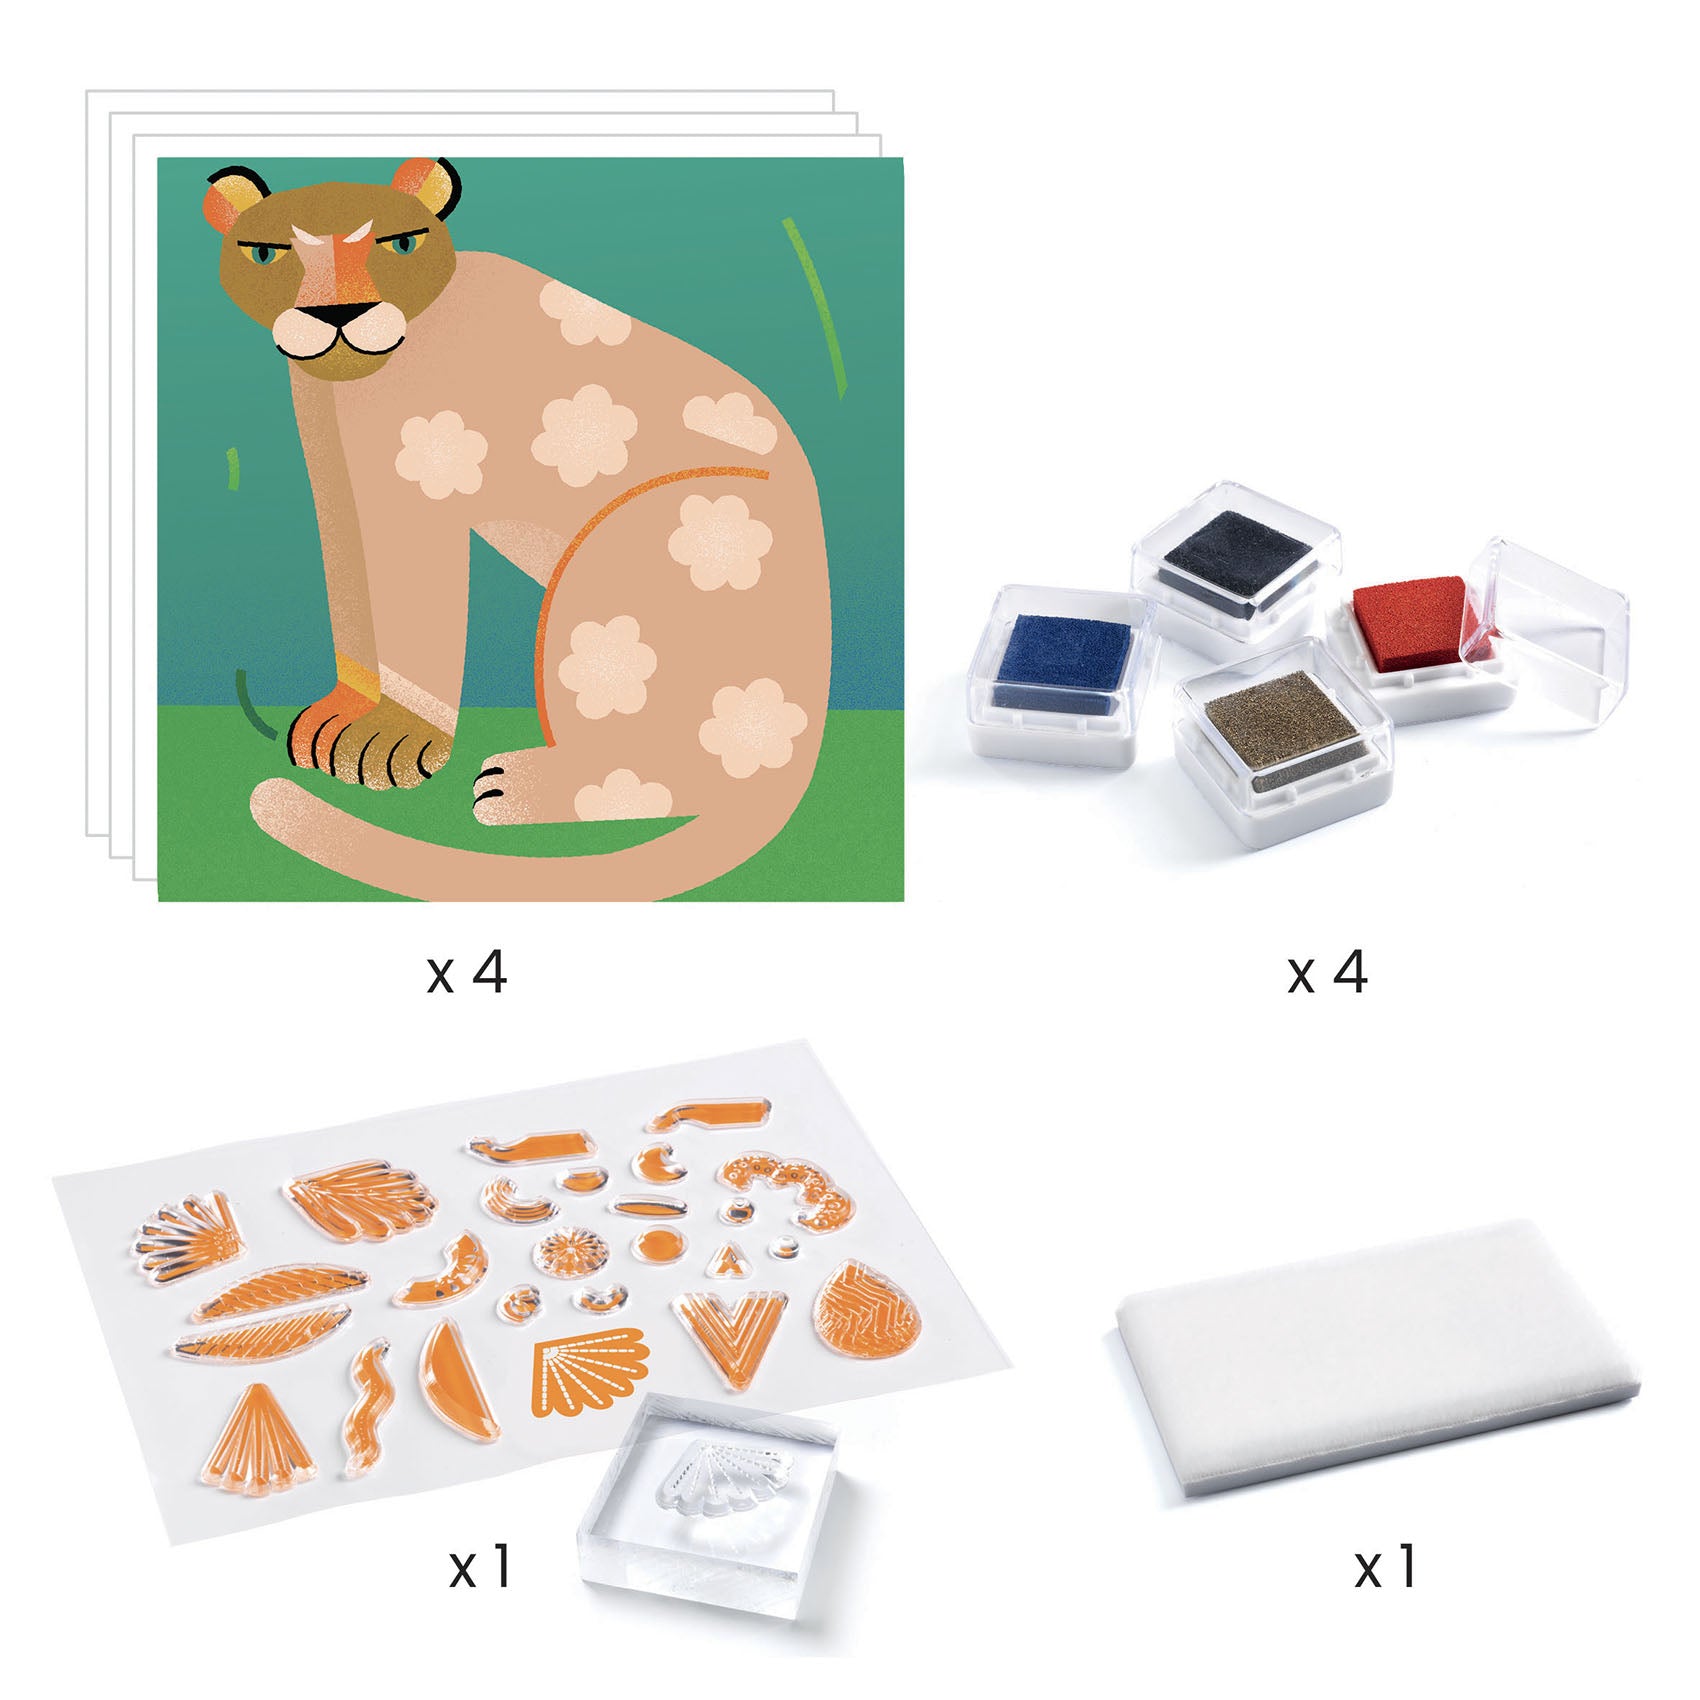 Djeco Stamps – Patterns & Animals